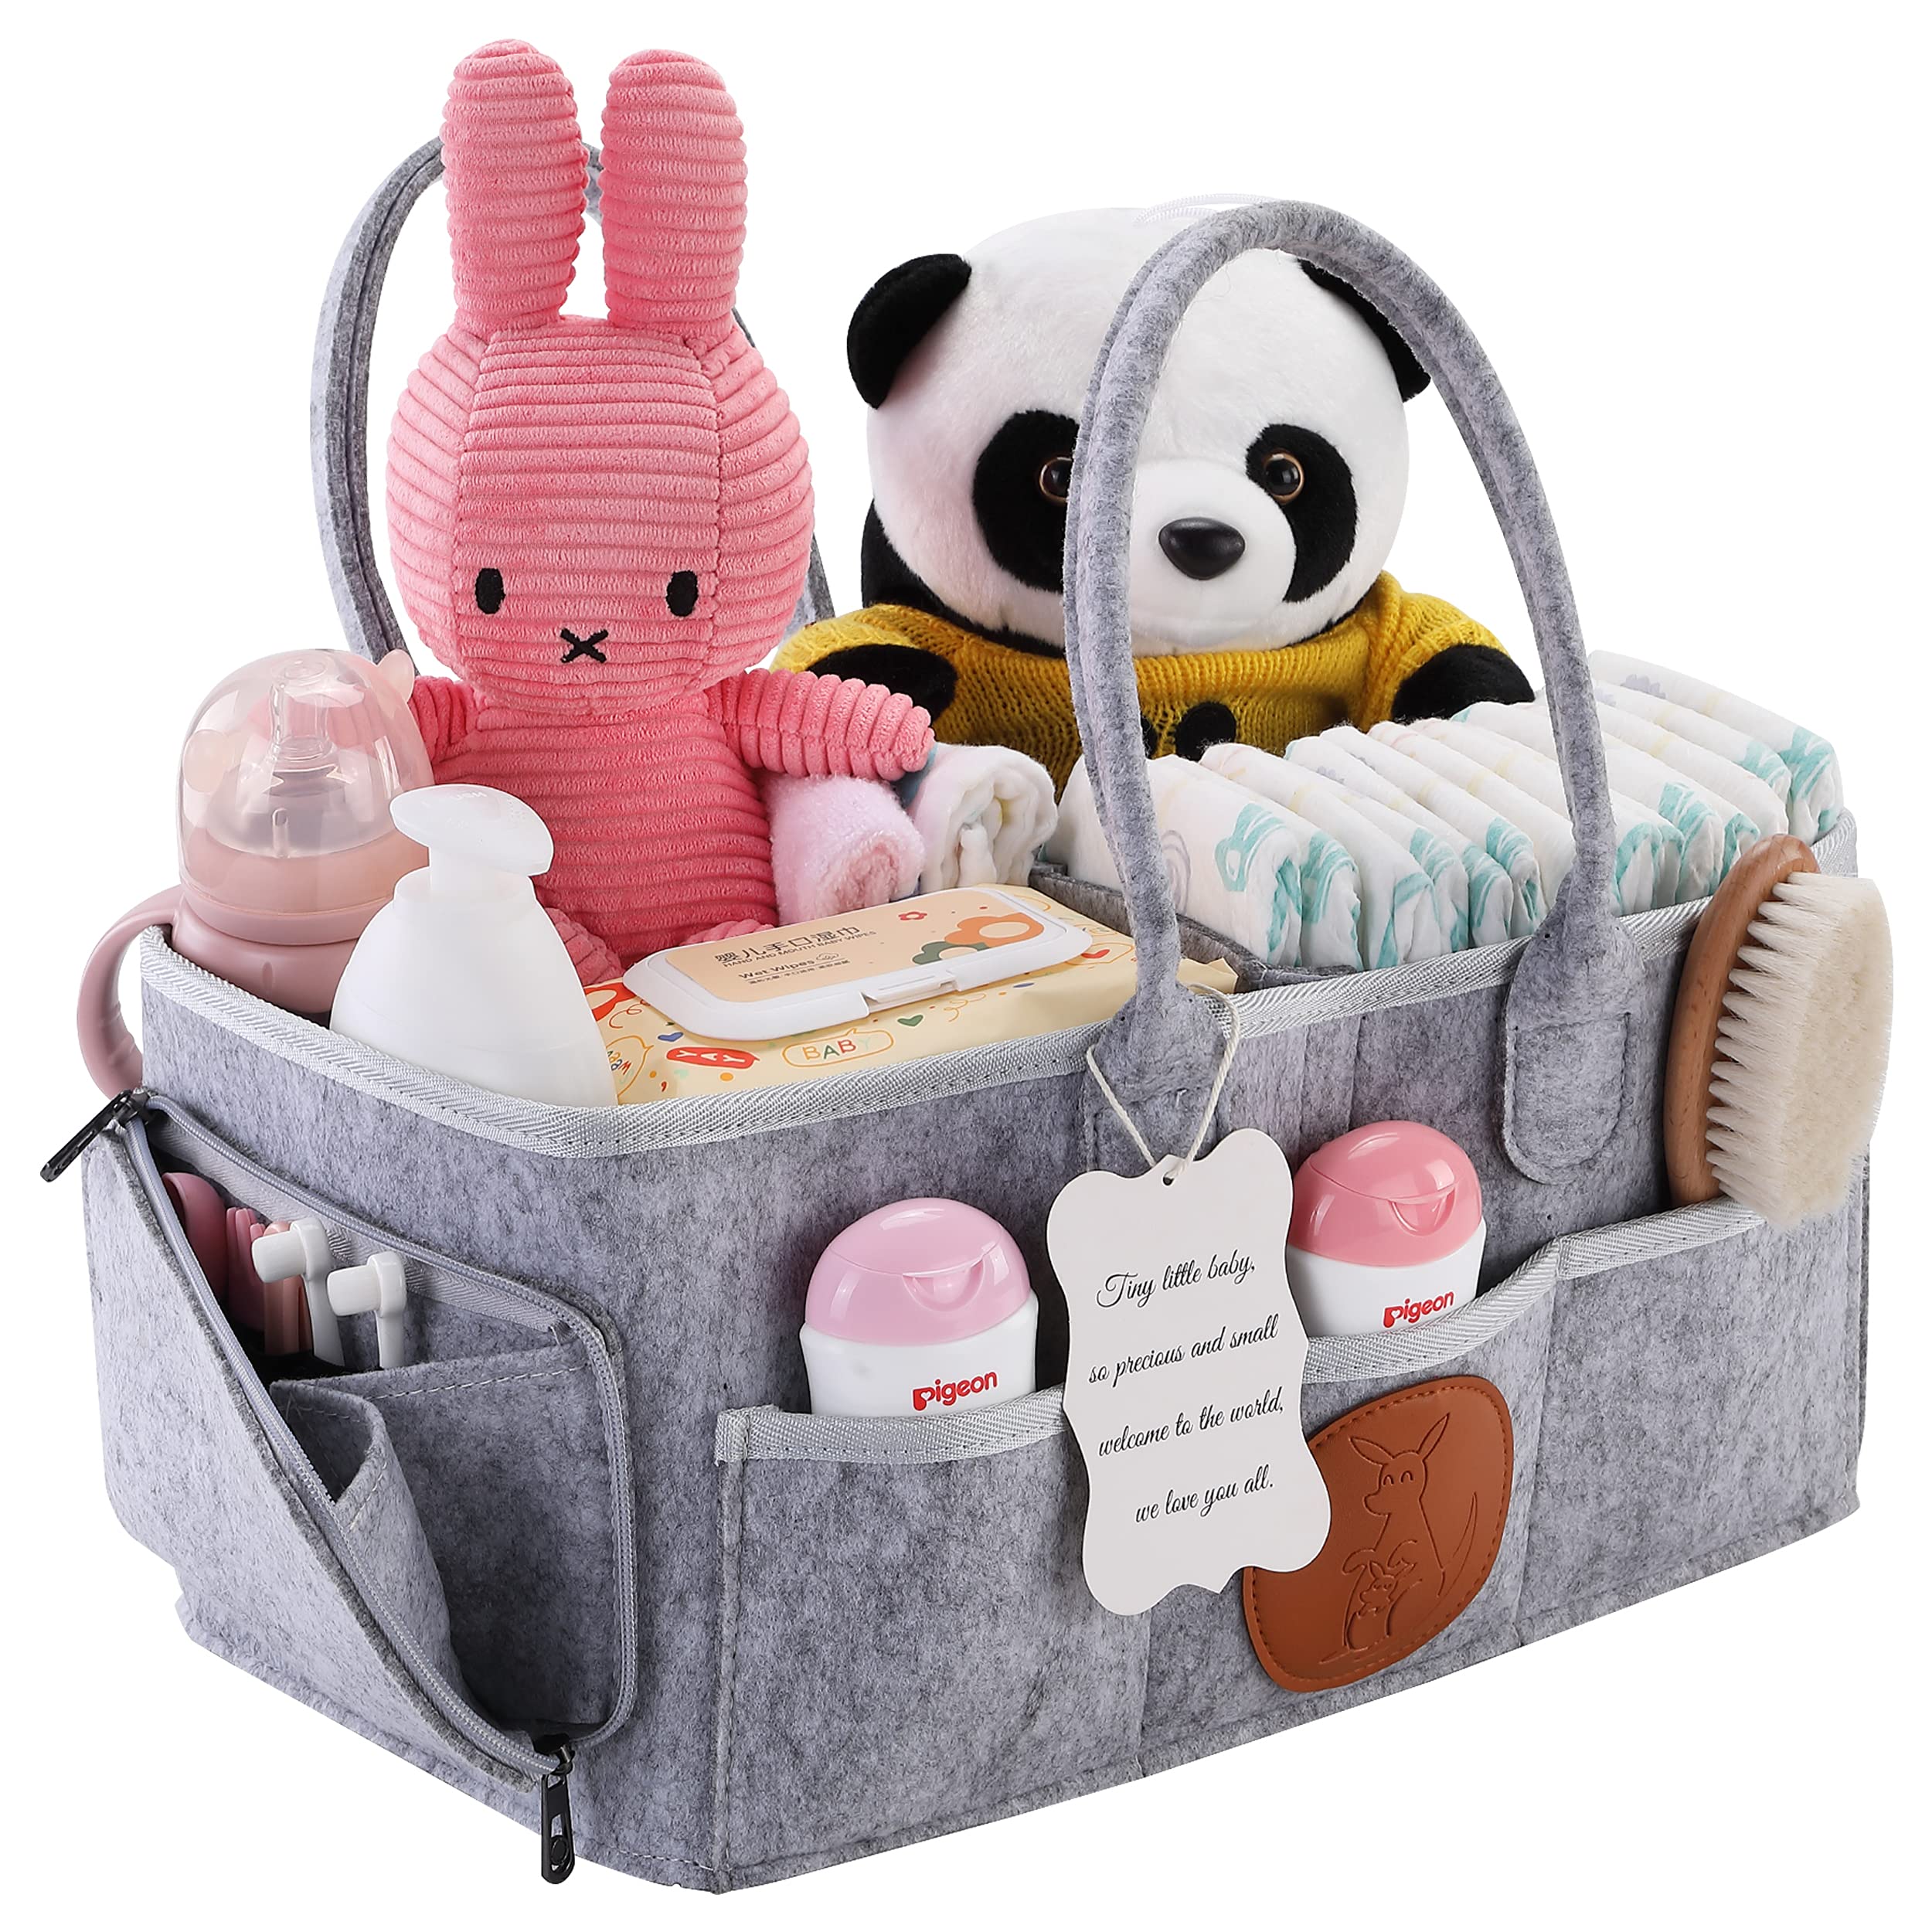 Junior's Cart - Baby Nappy Caddy Organizer - Baby Storage Caddy with Handle | Premium Quality with Zipper Pocket | Portable Nursery Storage Diaper Caddy Organiser (Grey)